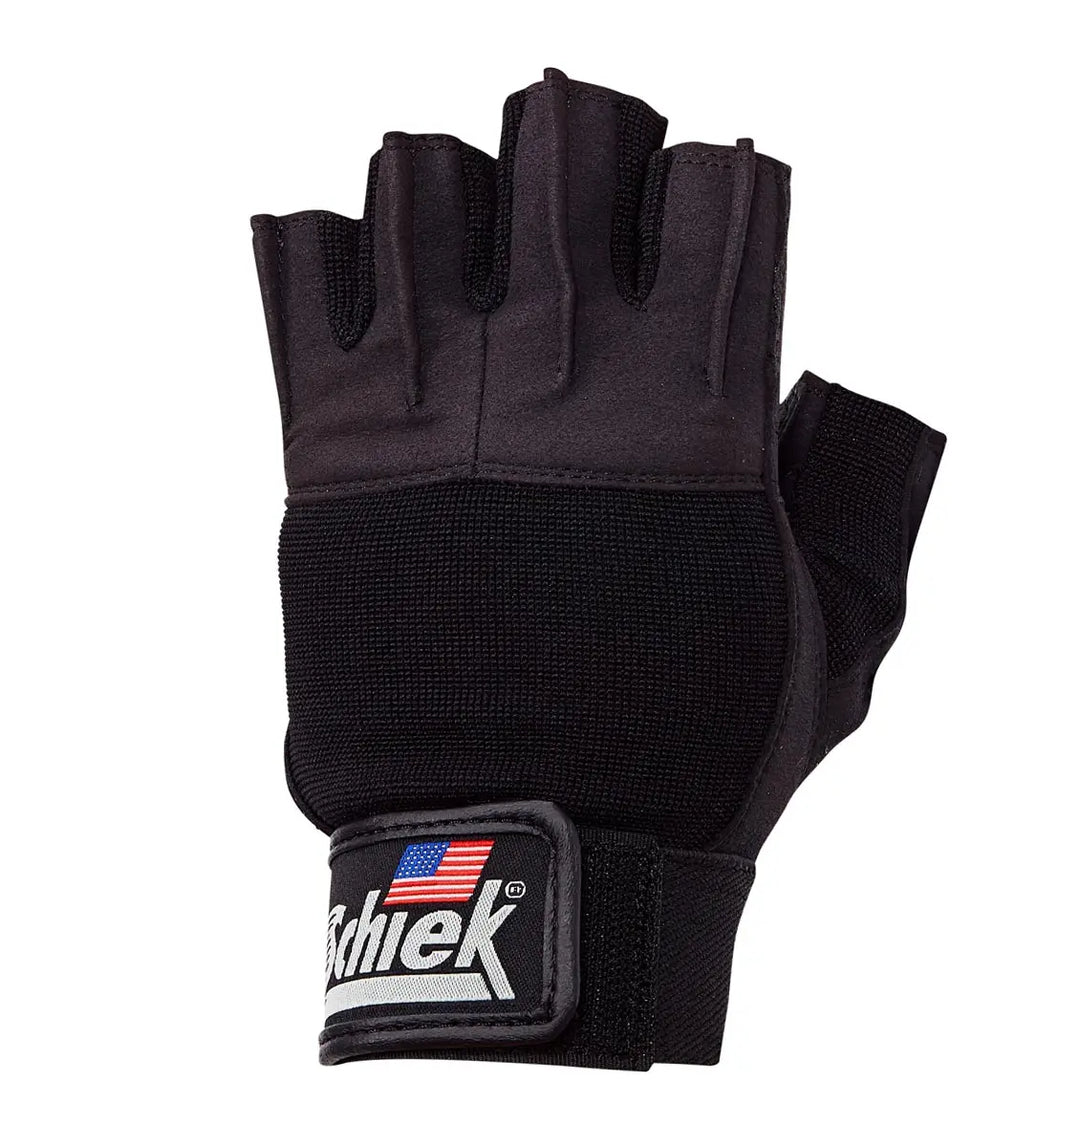 Model 530 Platinum Series Lifting Gloves Schiek Sports